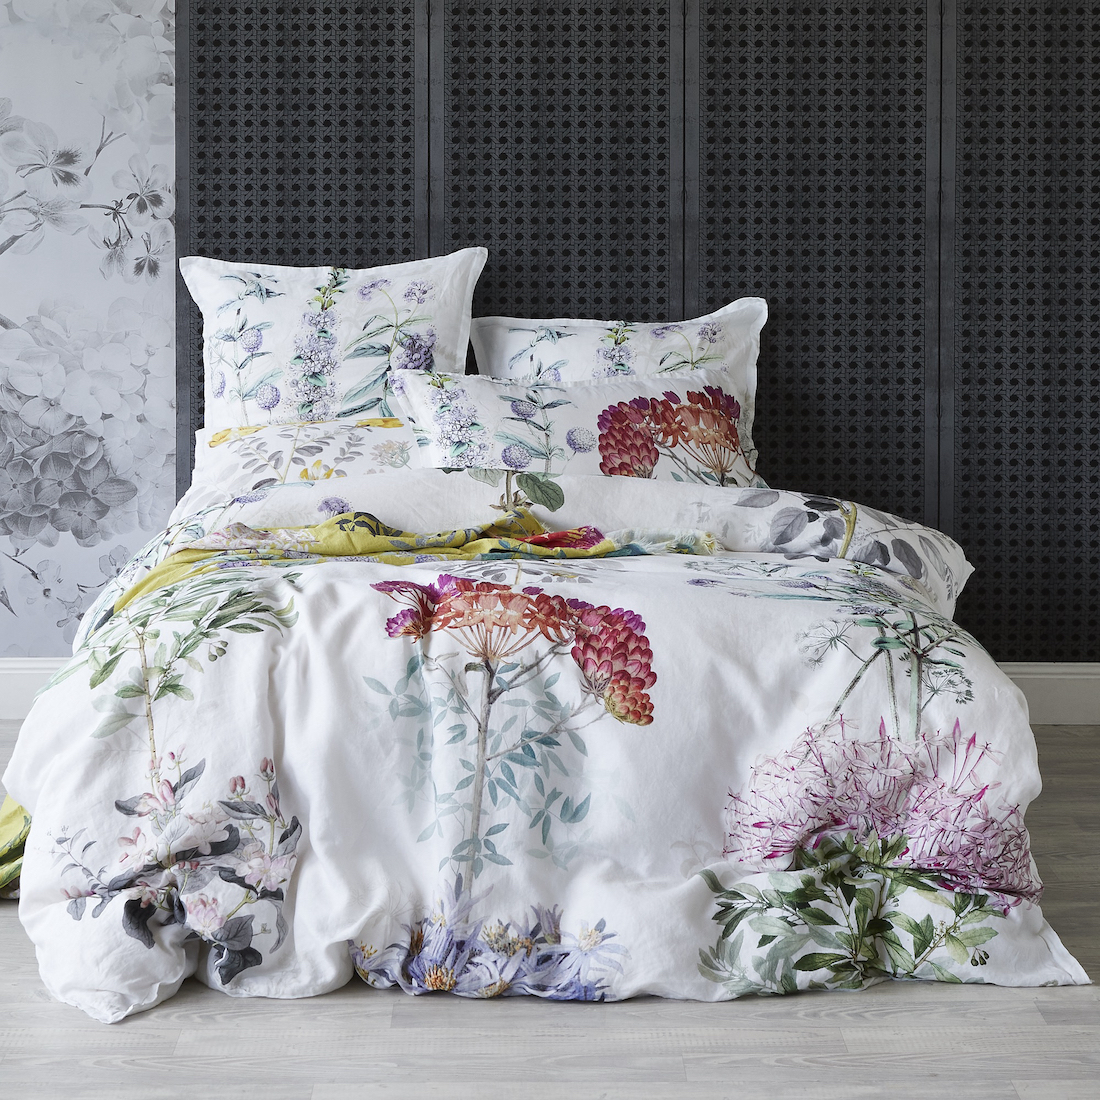 Floral print linen bedding